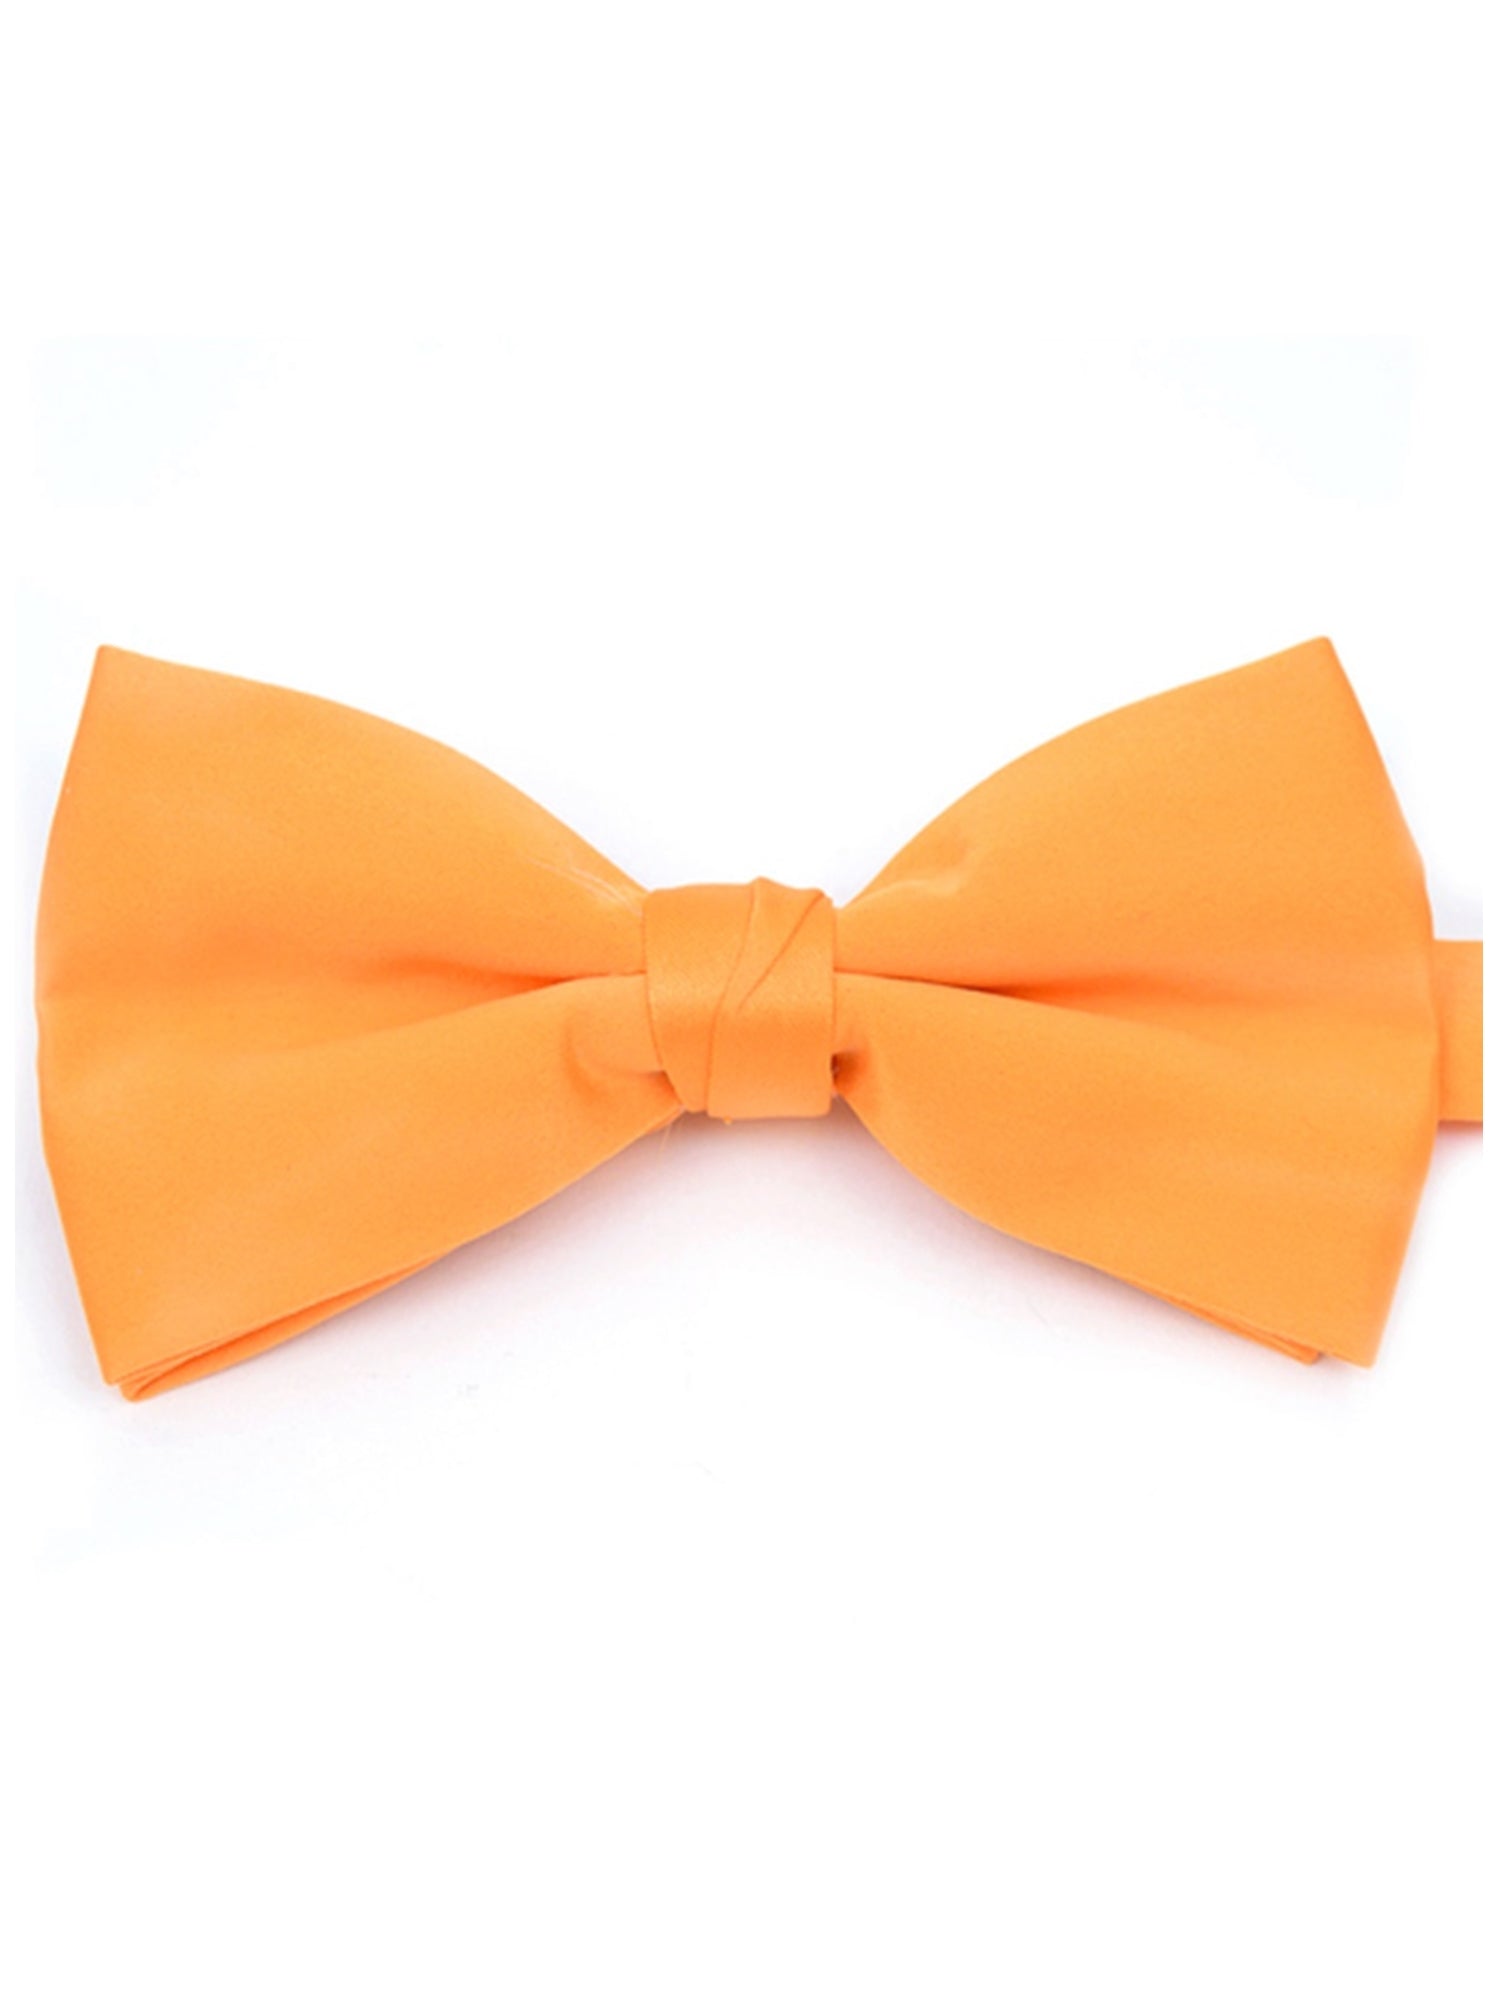 Young Boy's Pre-tied Adjustable Length Bow Tie - Formal Tuxedo Solid Color Boy's Solid Color Bow Tie TheDapperTie Neon Orange One Size 